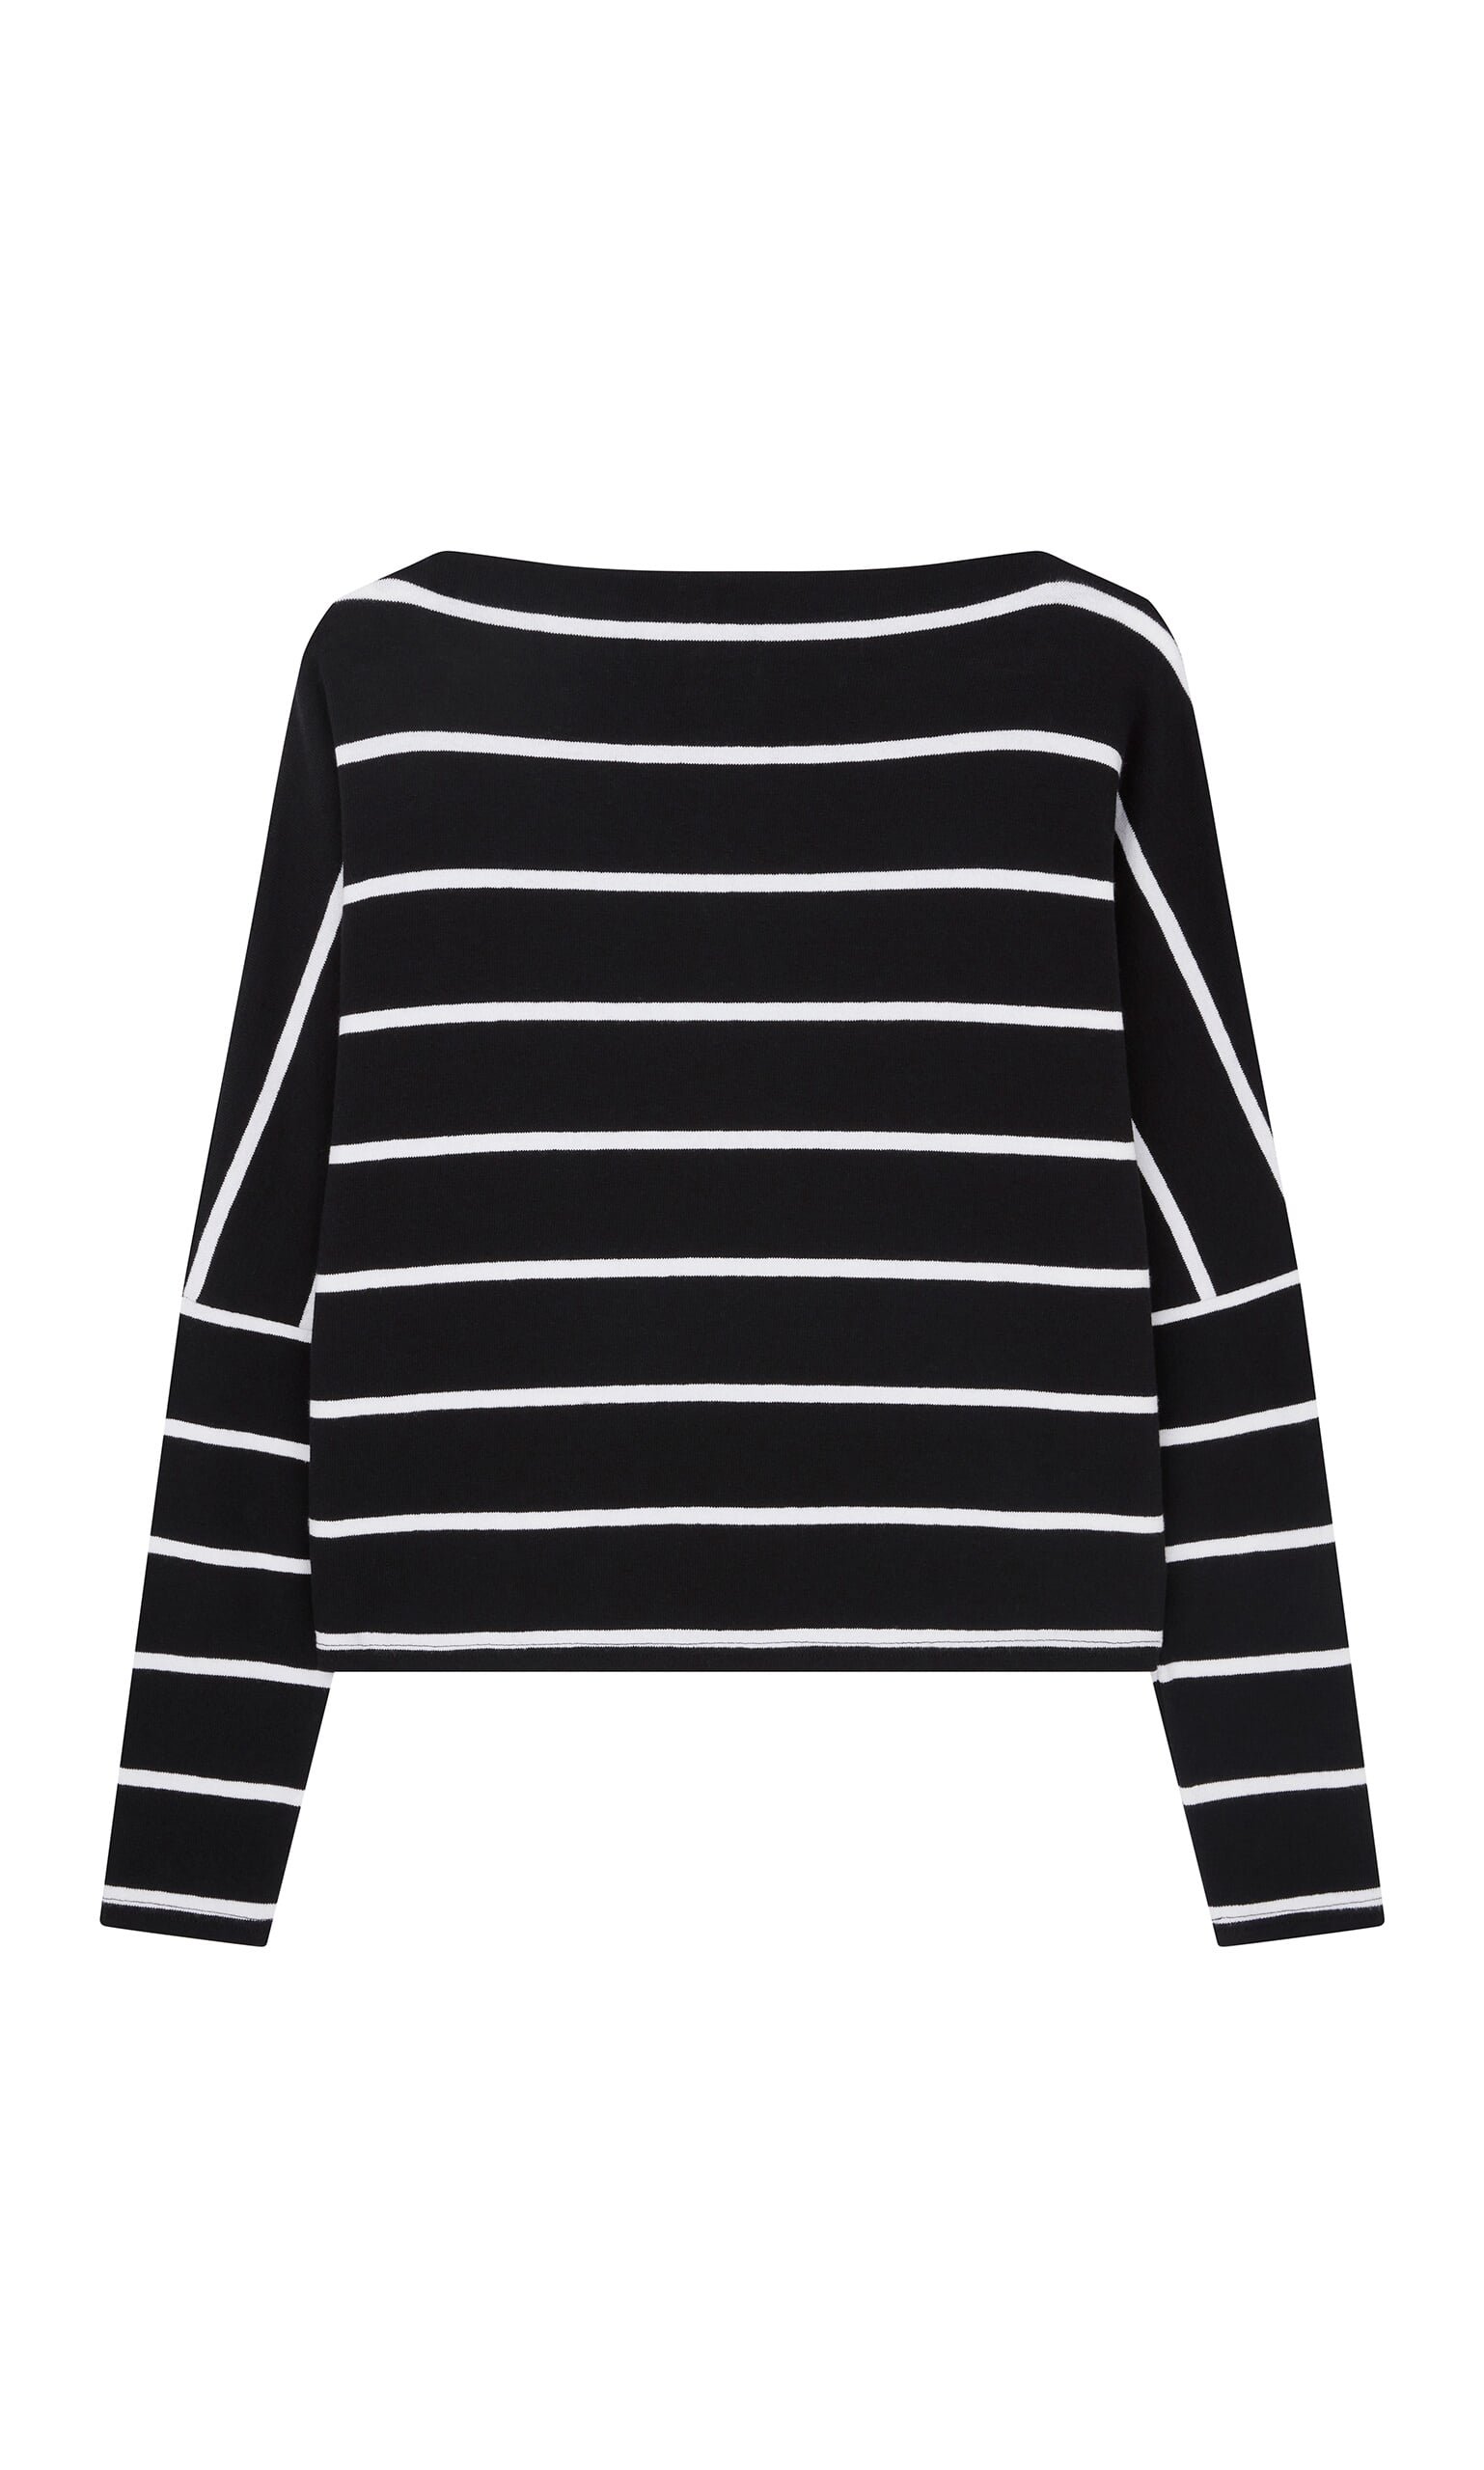 Breton sweater - Plümo Ltd